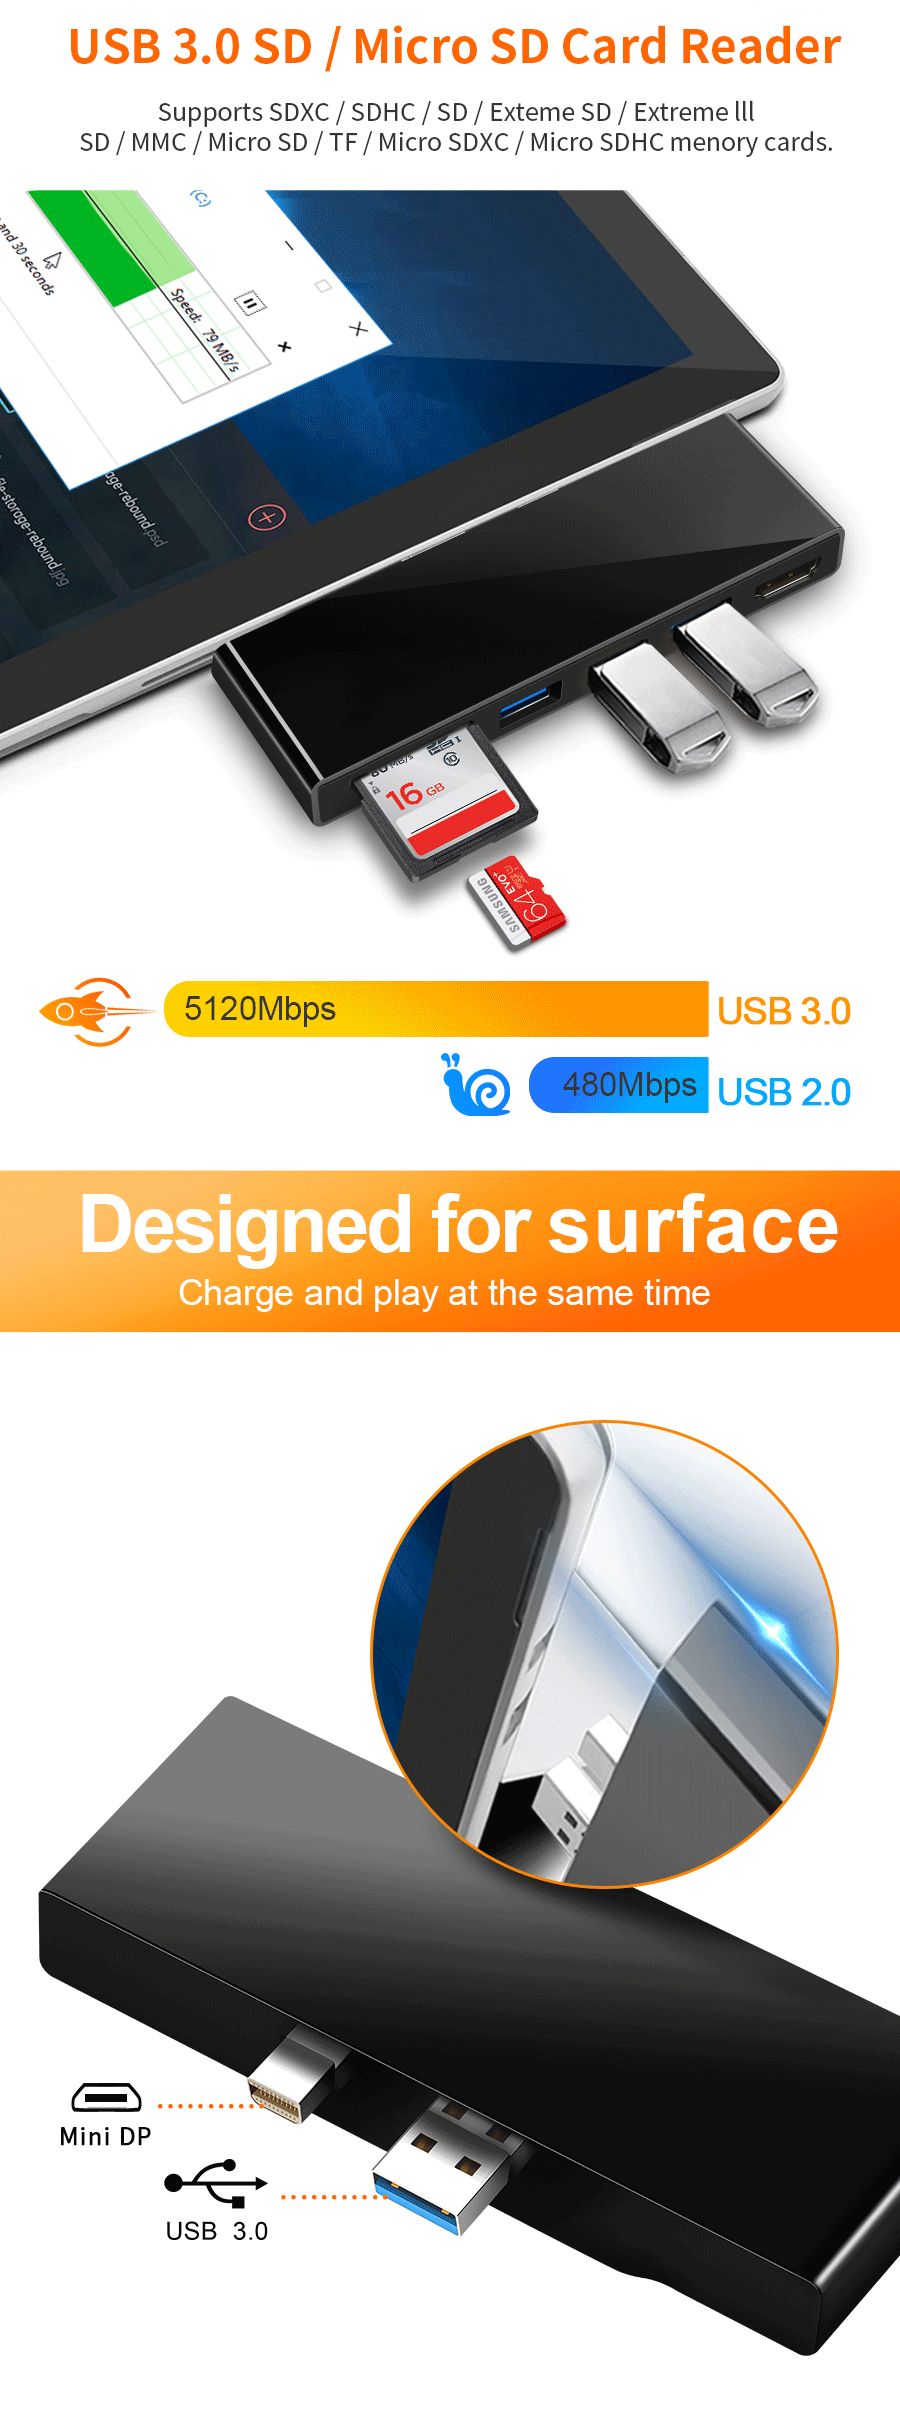 Rocketek-SUR469-or-SUR569-USB-Hub-Card-Reader-4K-HD-USB-Adapter-for-SD-TF-Card-Surface-Pro-1624427